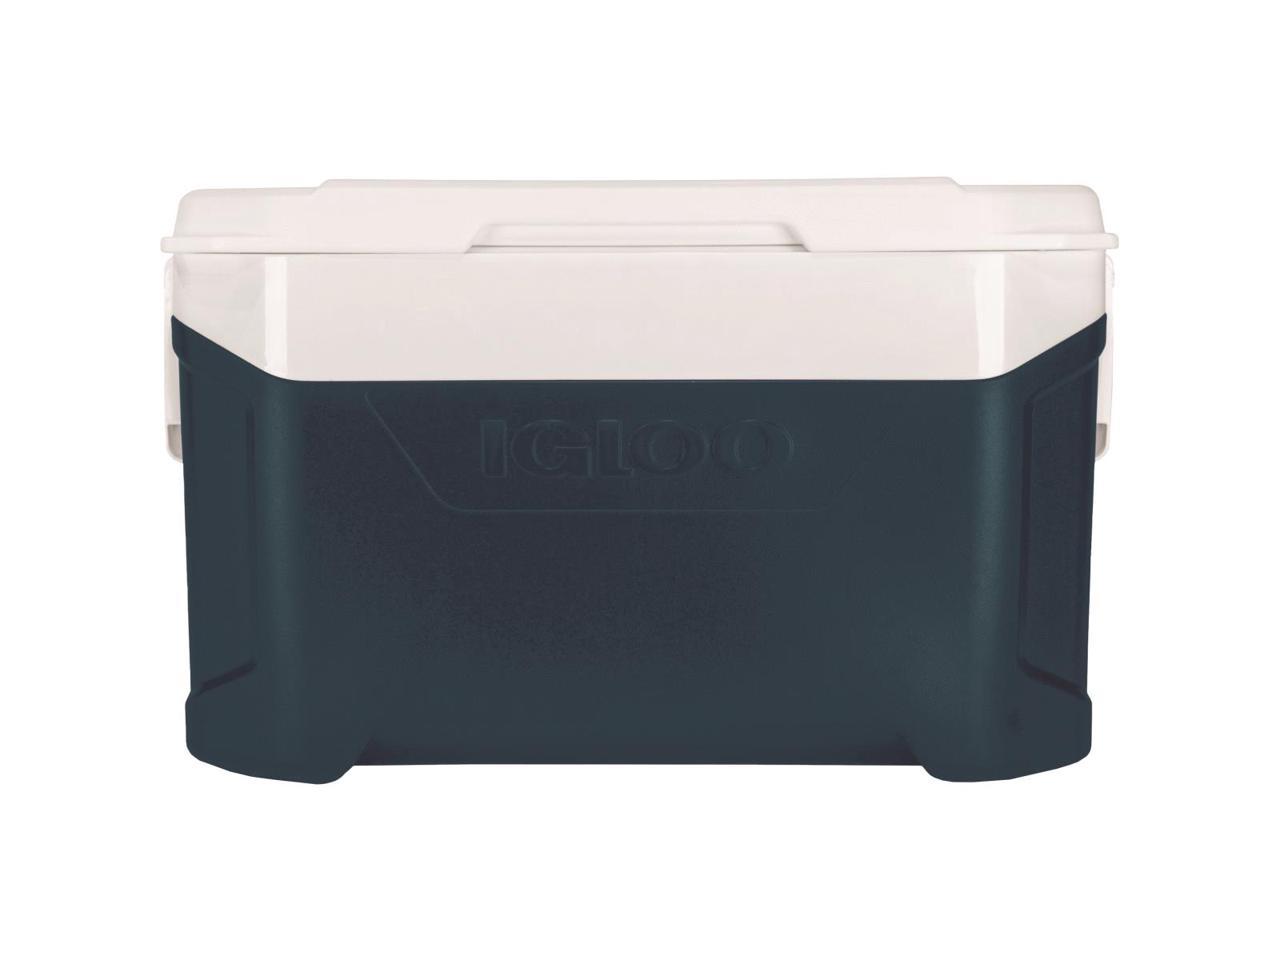 Igloo 50 Quart Latitude Cooler 49886 - Newegg.com